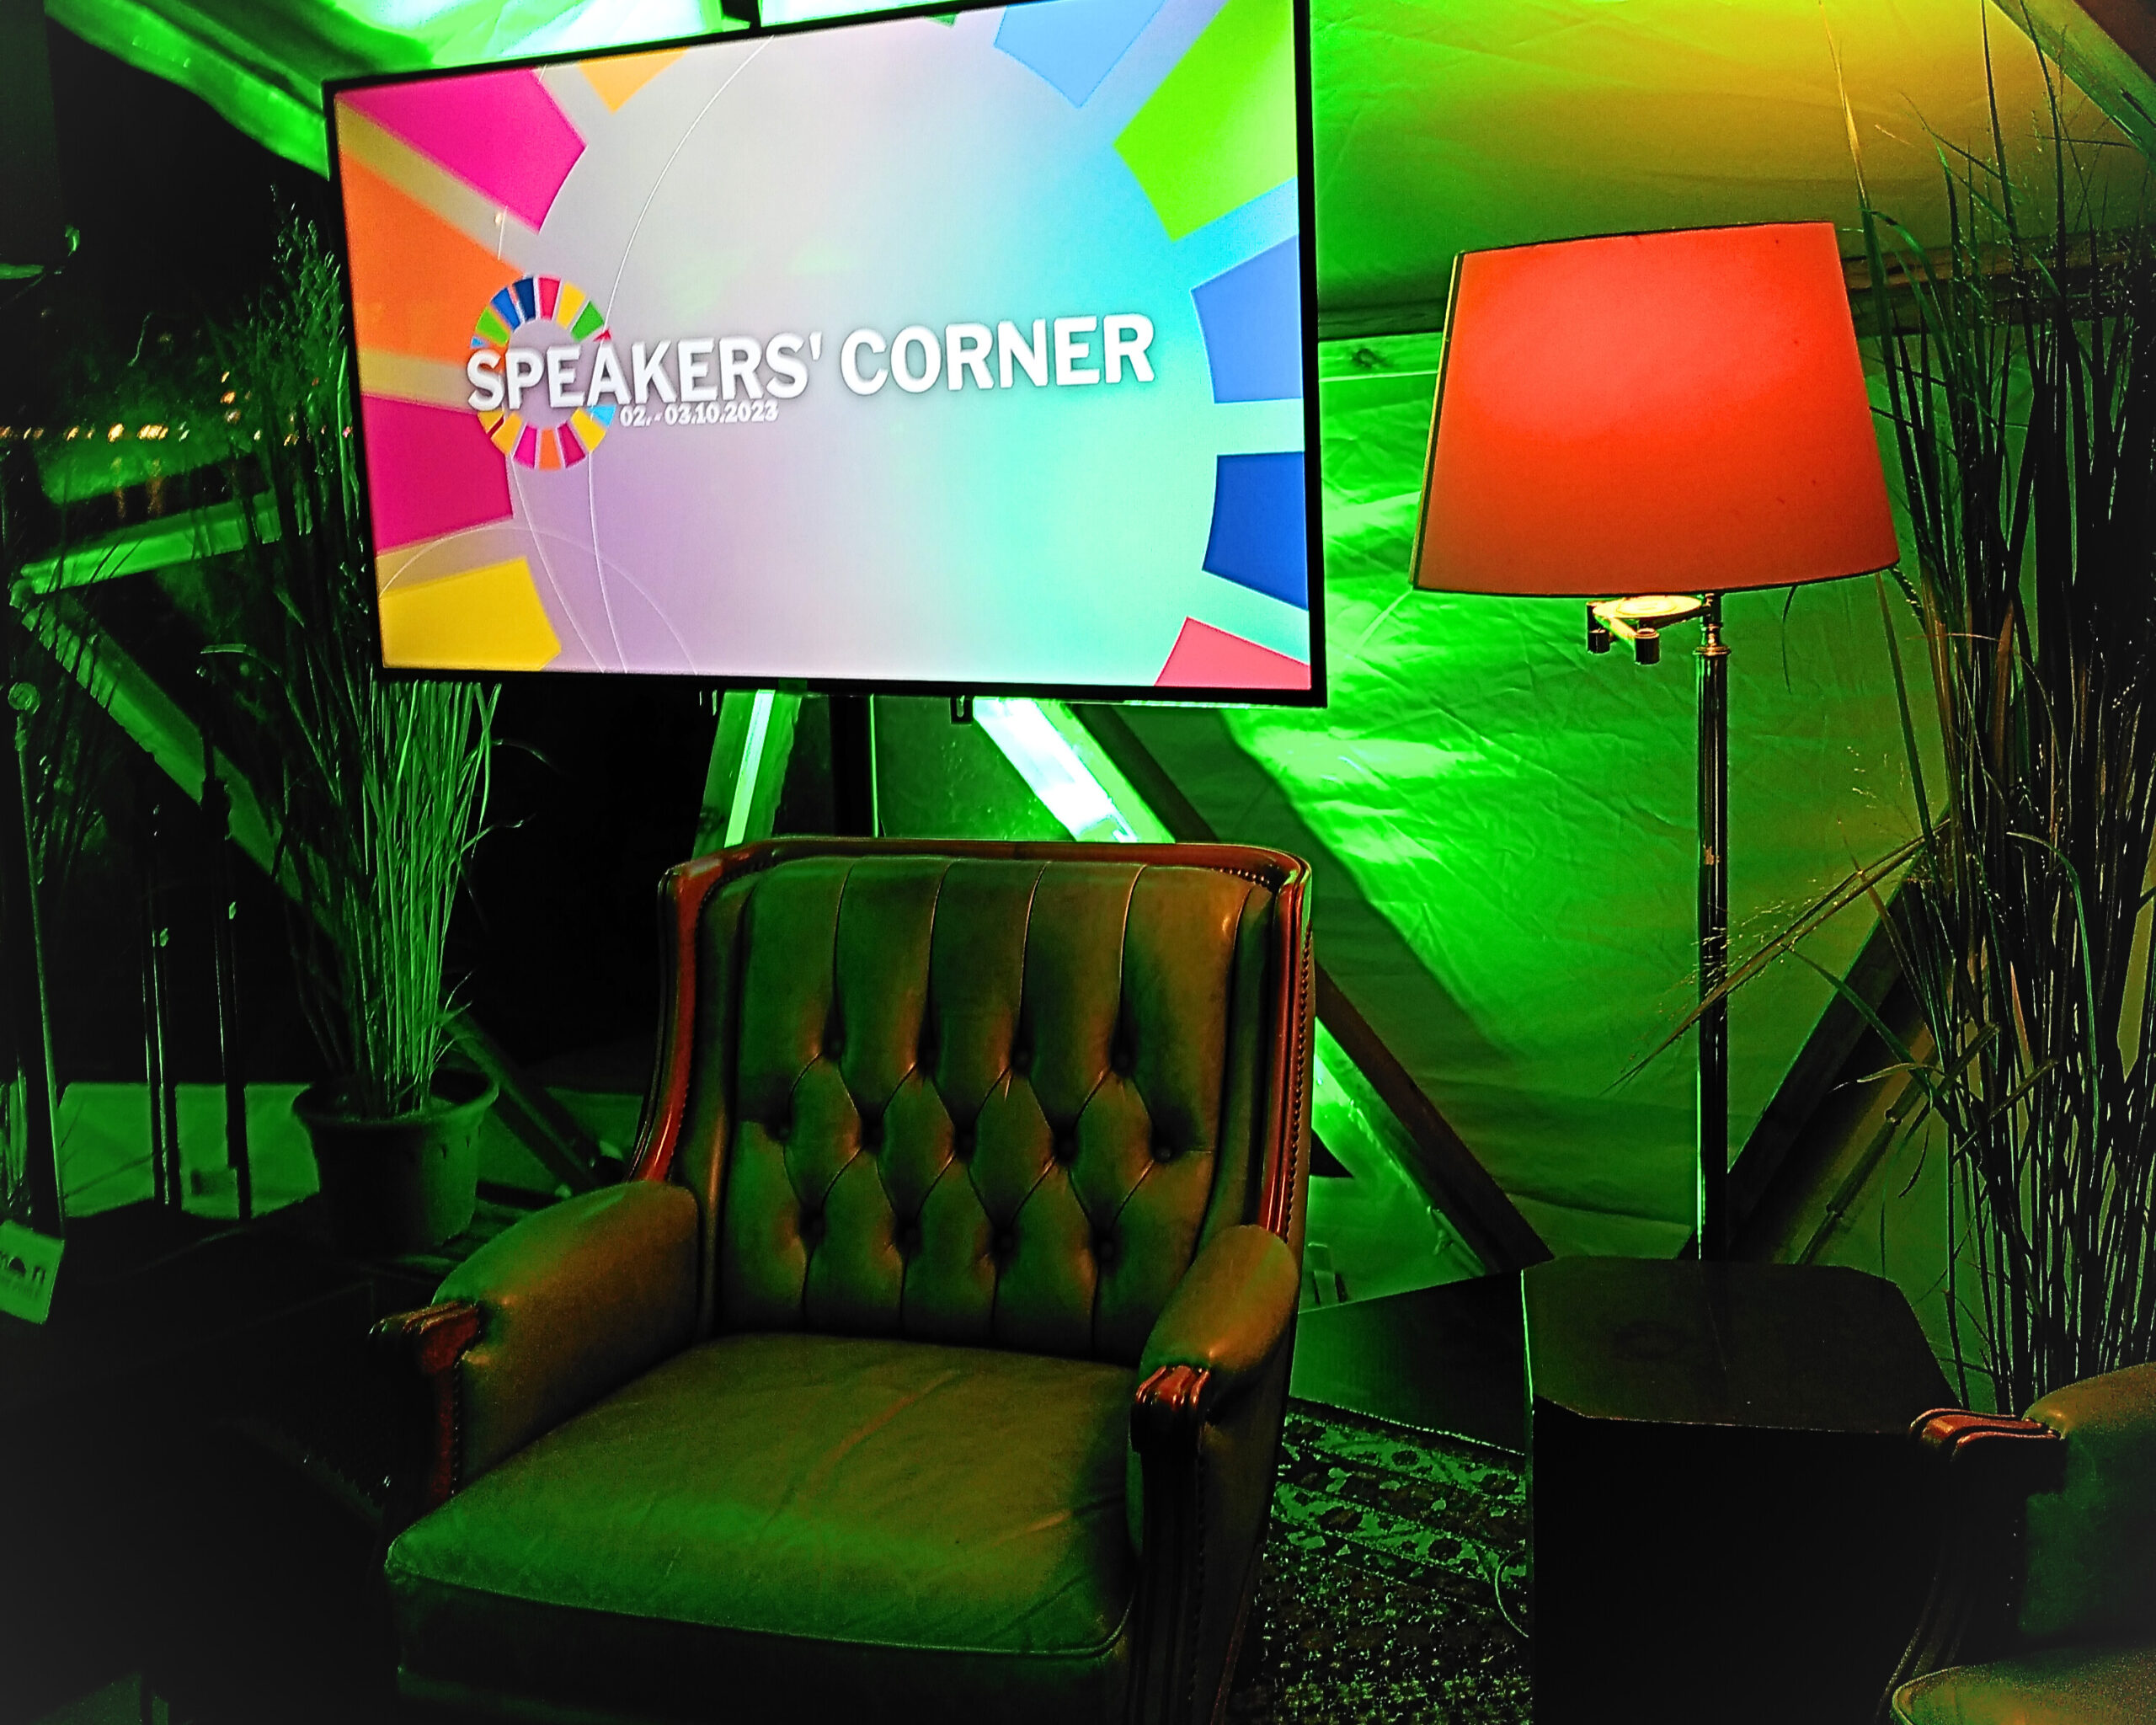 Willkommen in der Speakers‘ Corner!